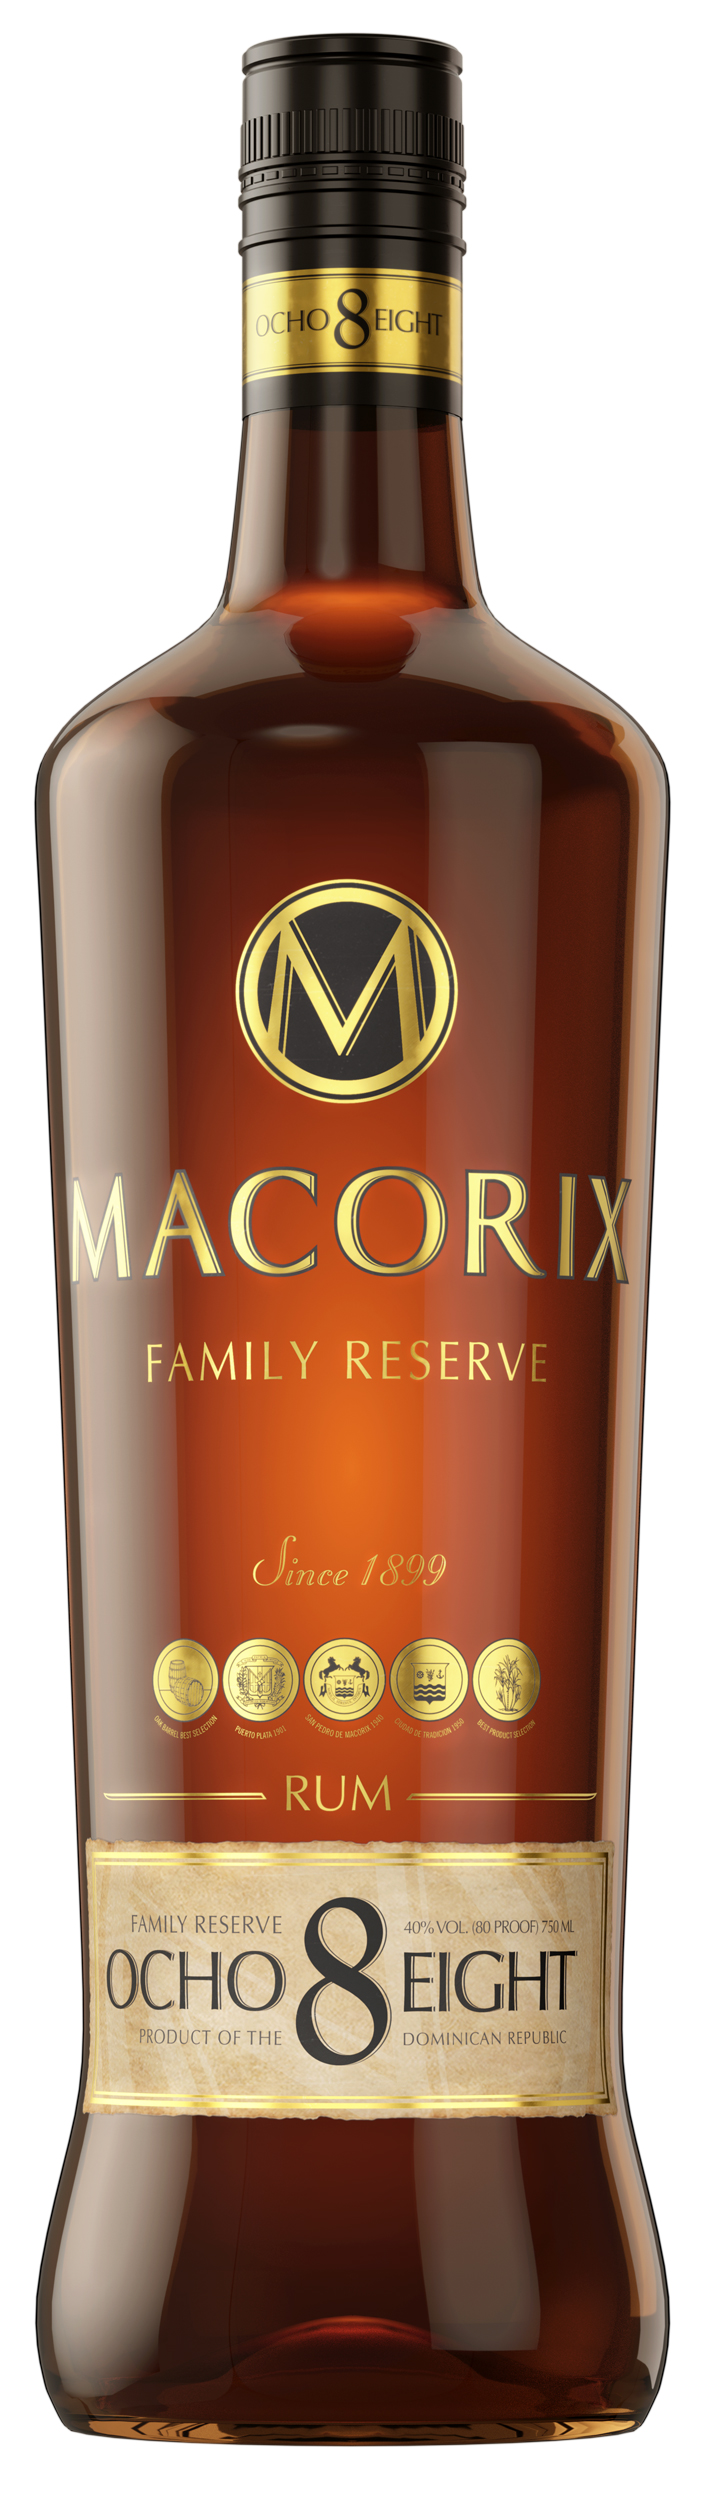 Macorix Gran Reserva | Vinaio Imports